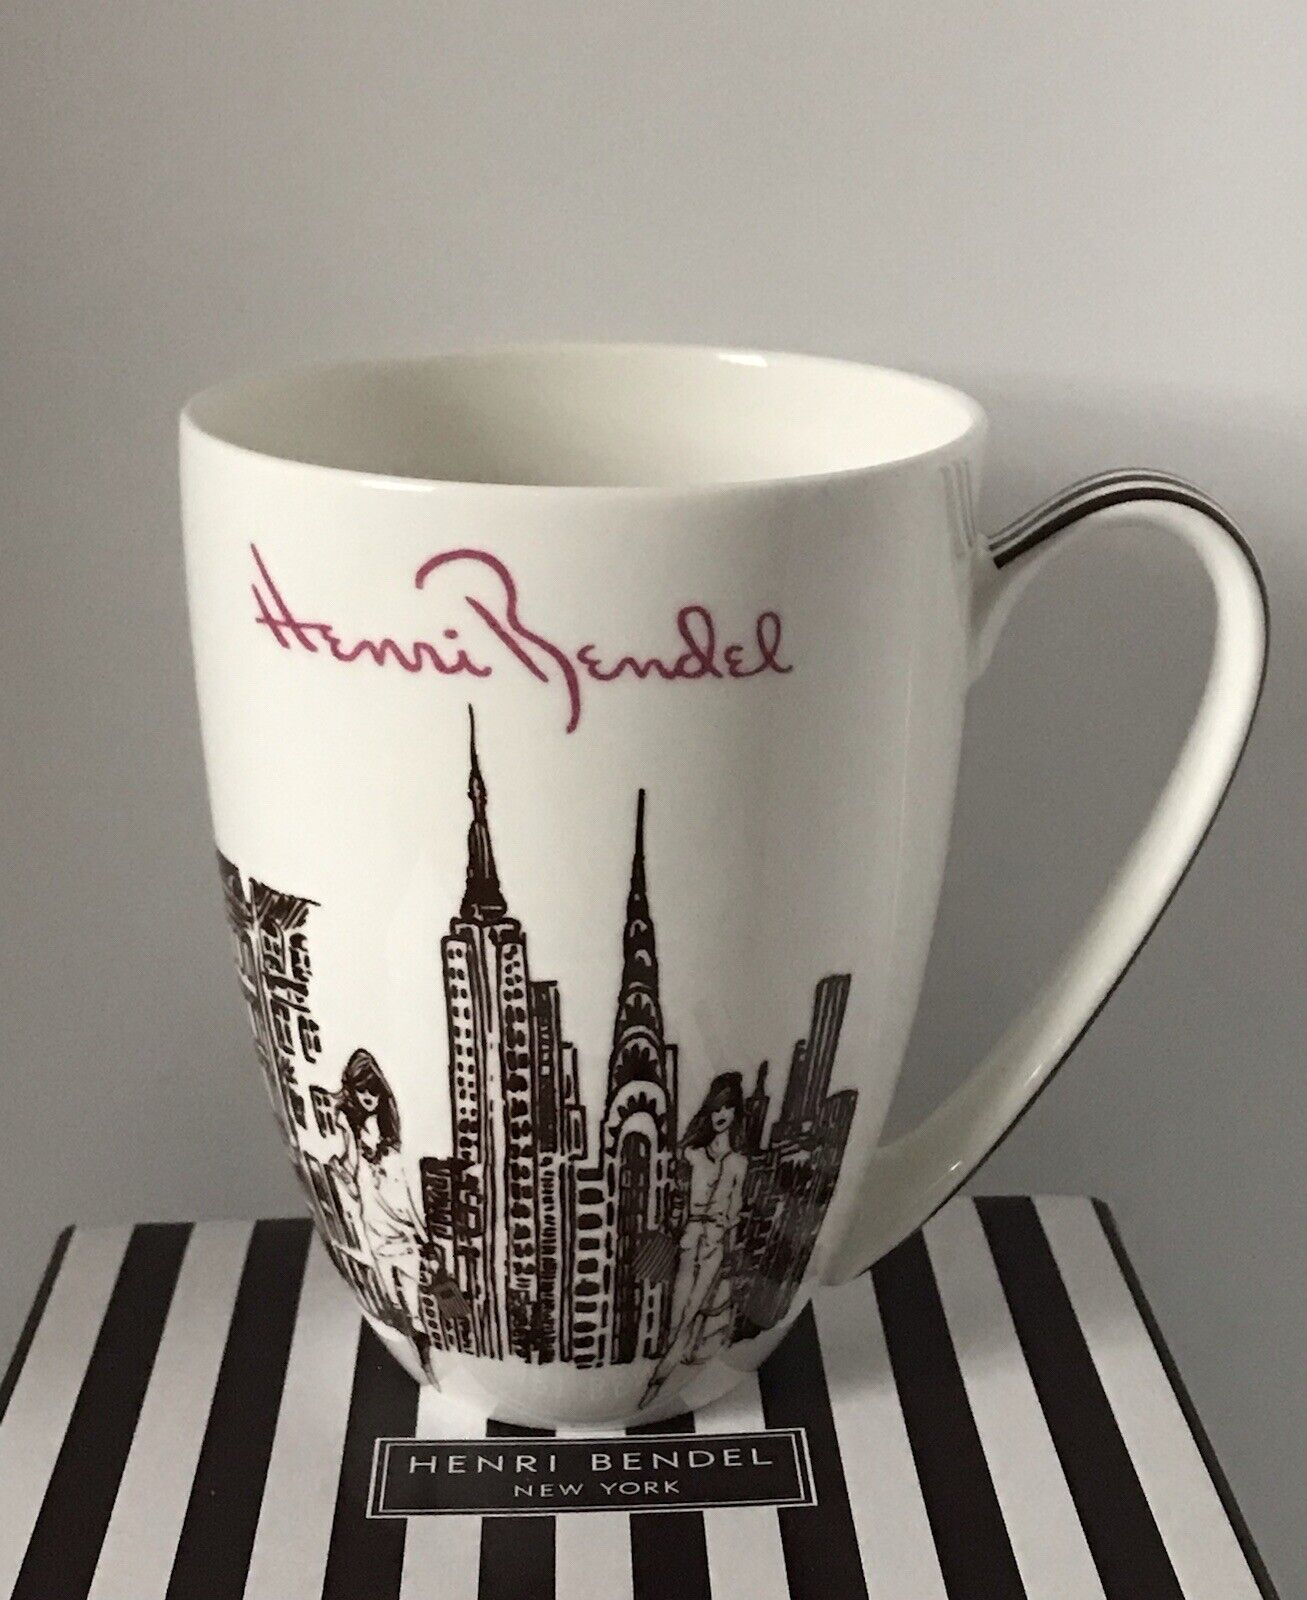 New Rare HENRI BENDEL Collectors’ Mug w/ NY Store Bldgs & Fashionistas Scenes